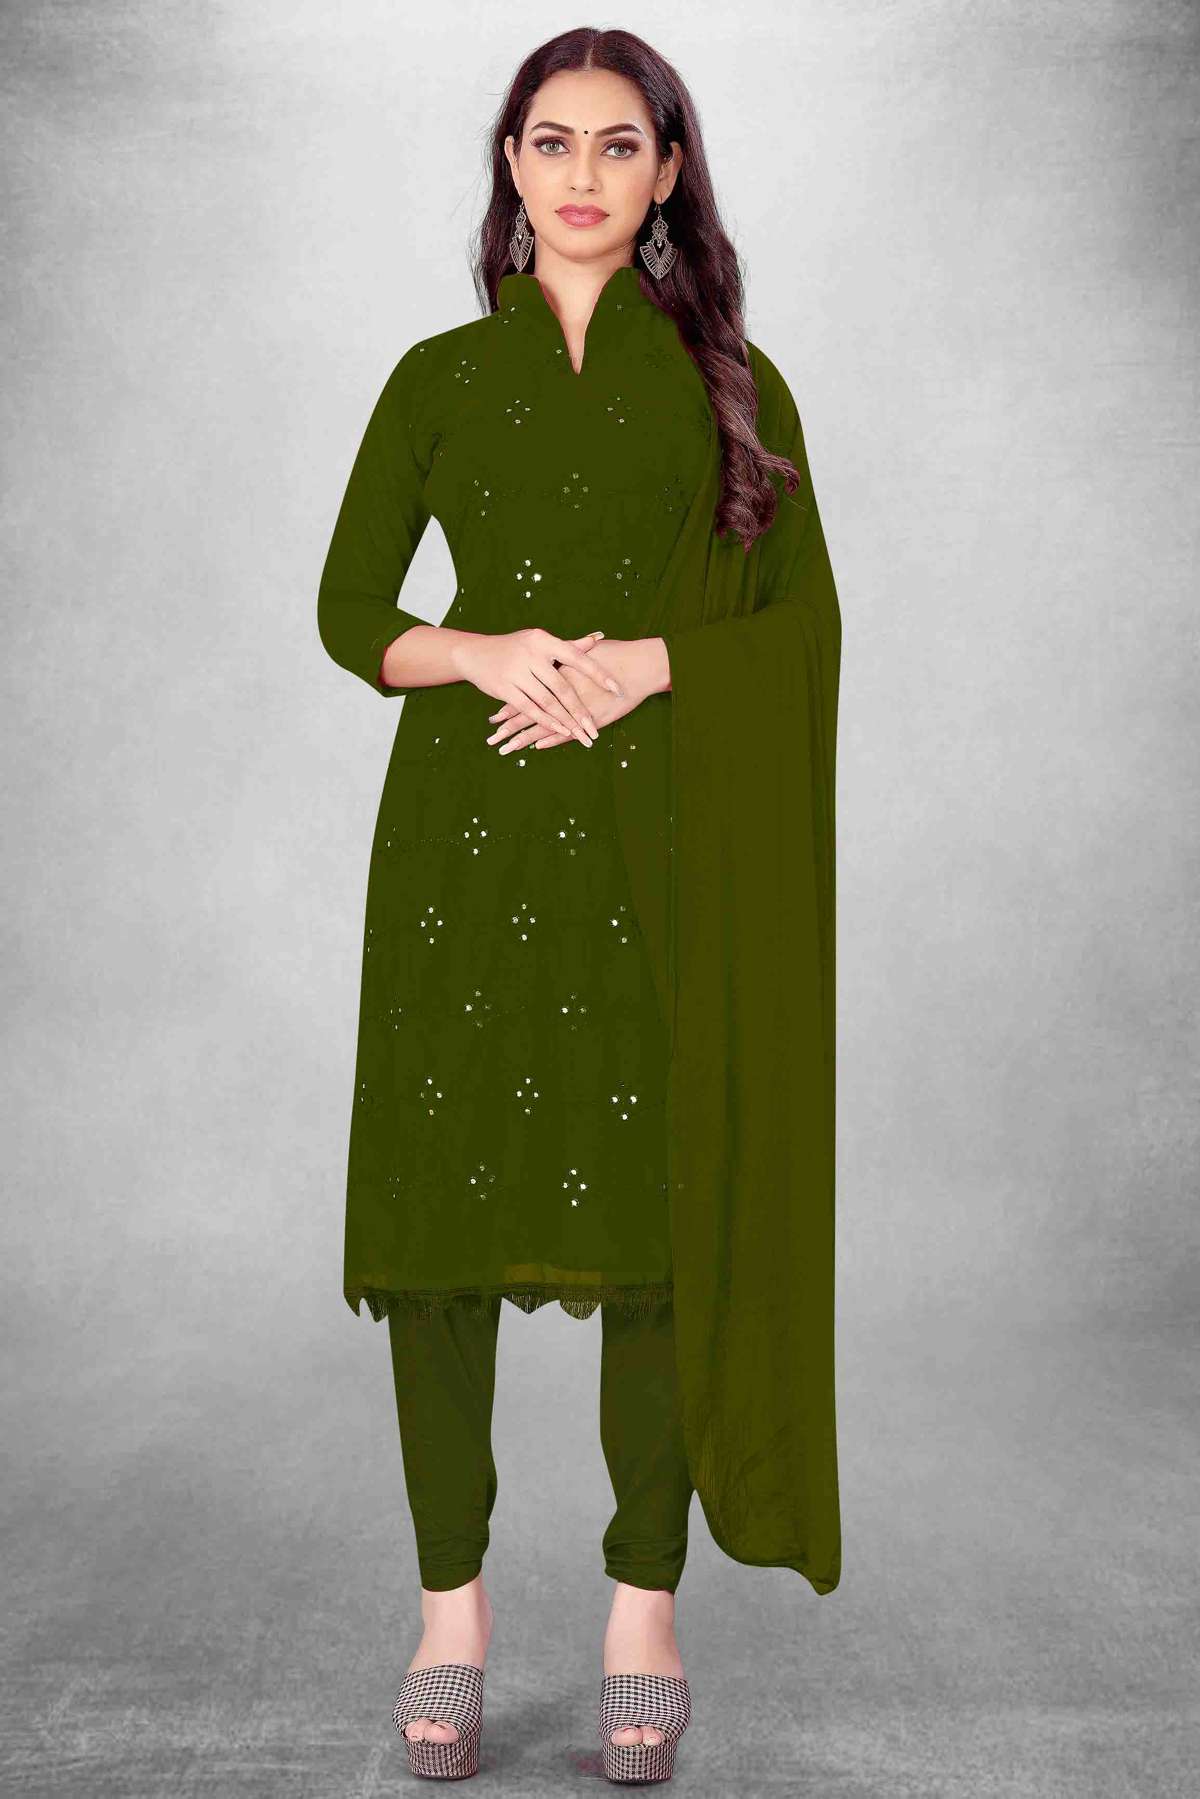 Georgette abaya style Anarkali suit in Mehndi colour 2071B